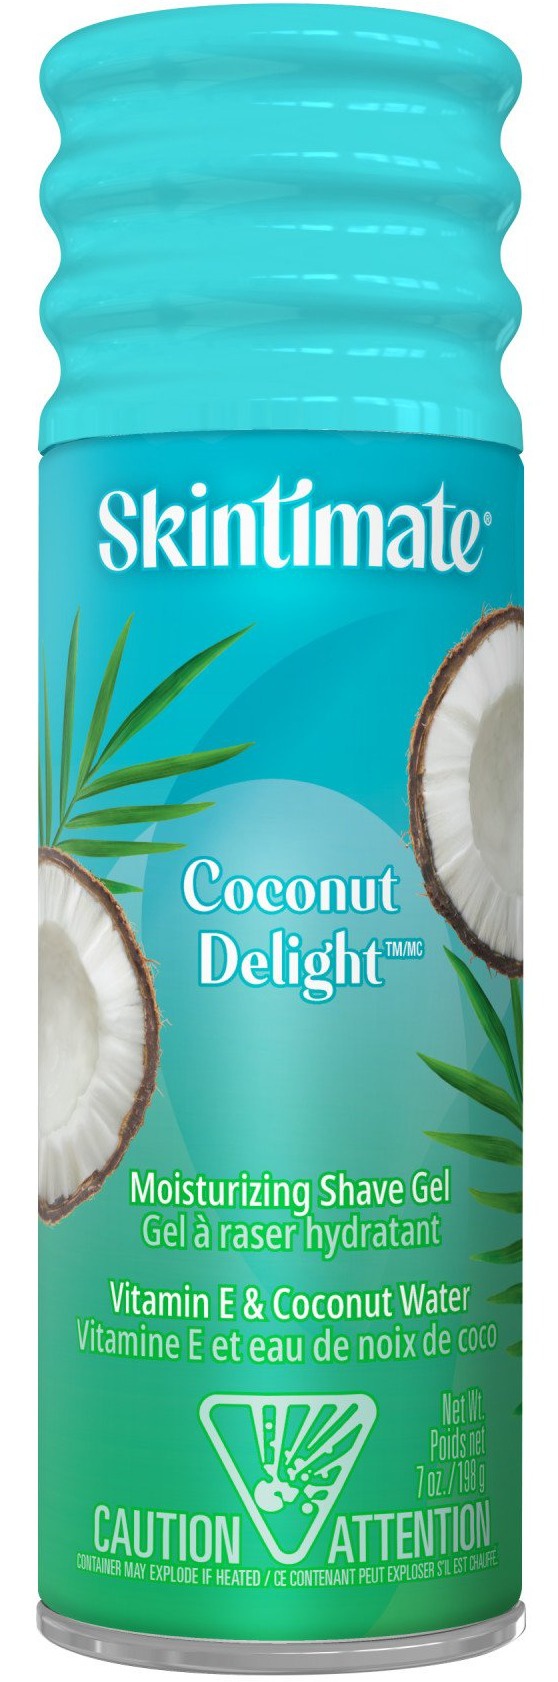 Skintamate Coconut Delight Moisturizing Shave Gel